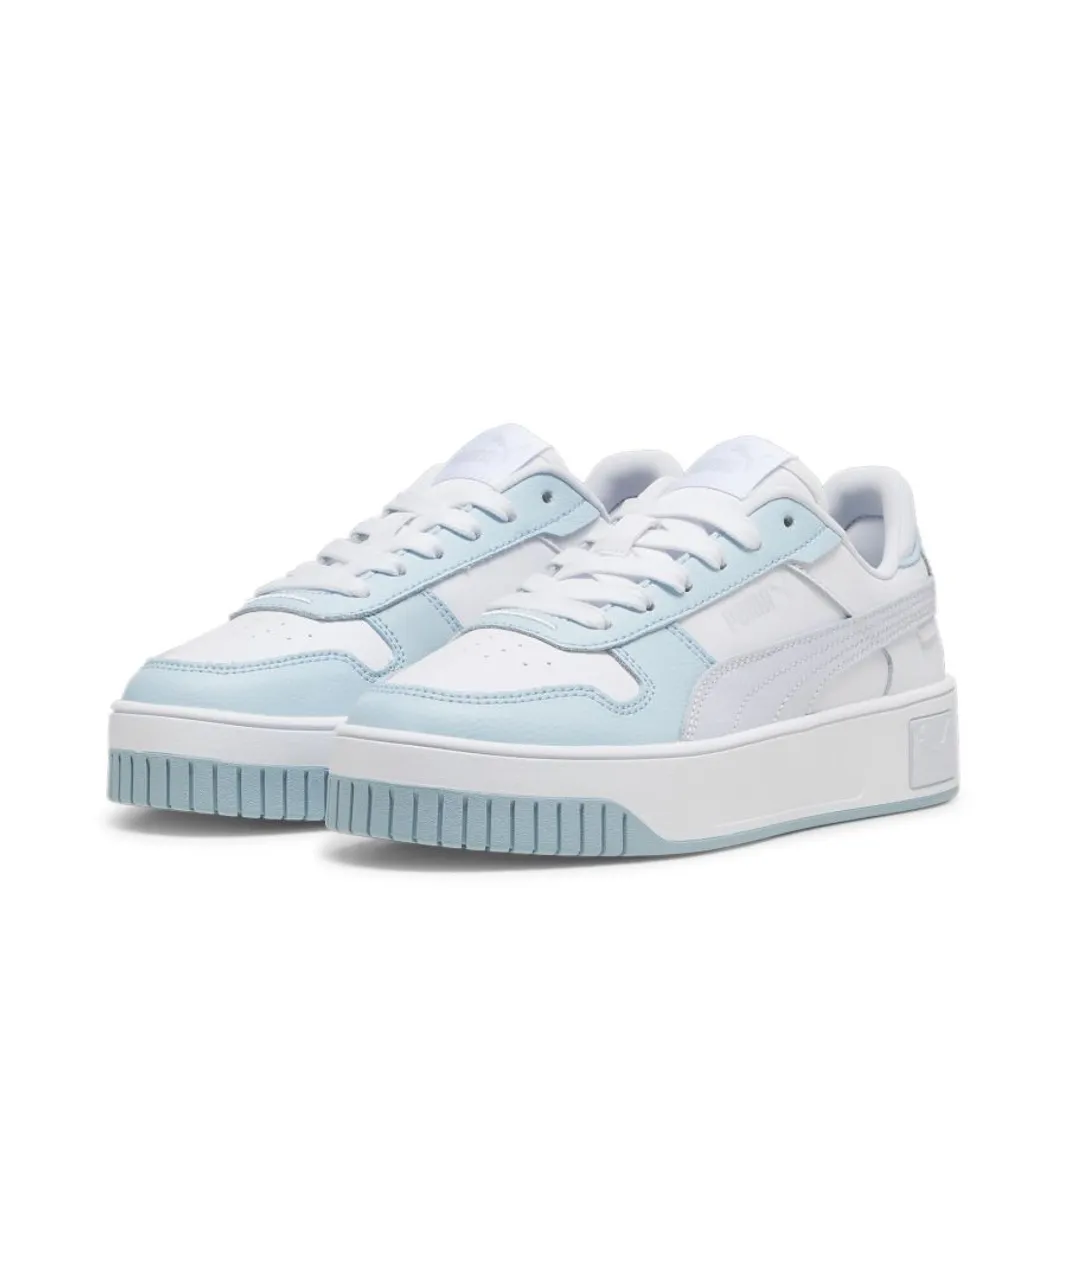 Puma Girls Carina Street Sneakers - White/Blue